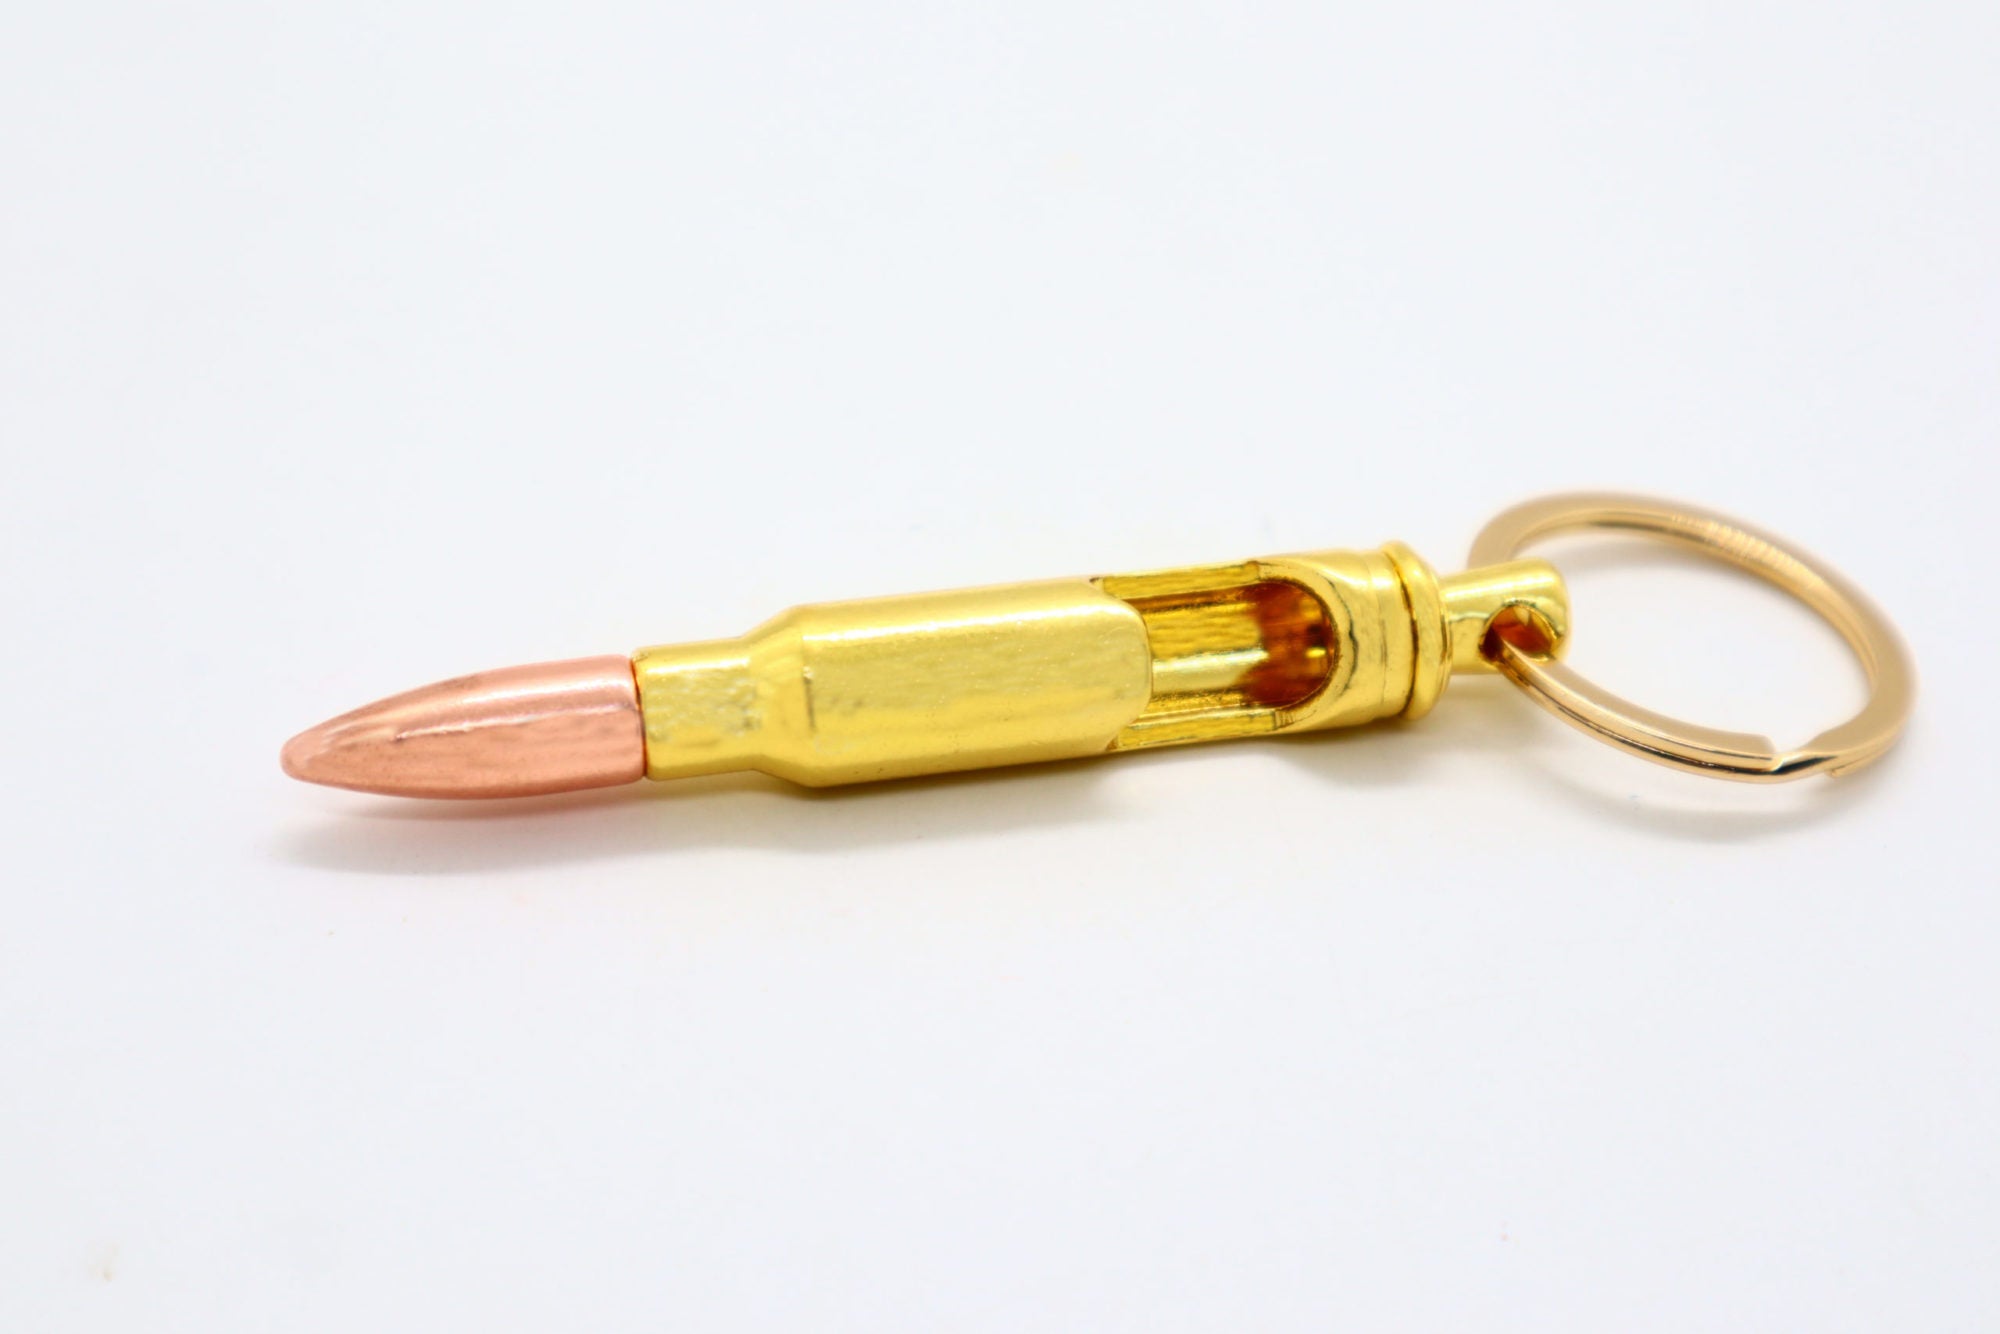 AUTOPOWERZ Tagnation Guns Bullet Keychain for Car Bike Home Keys Unisex Adult